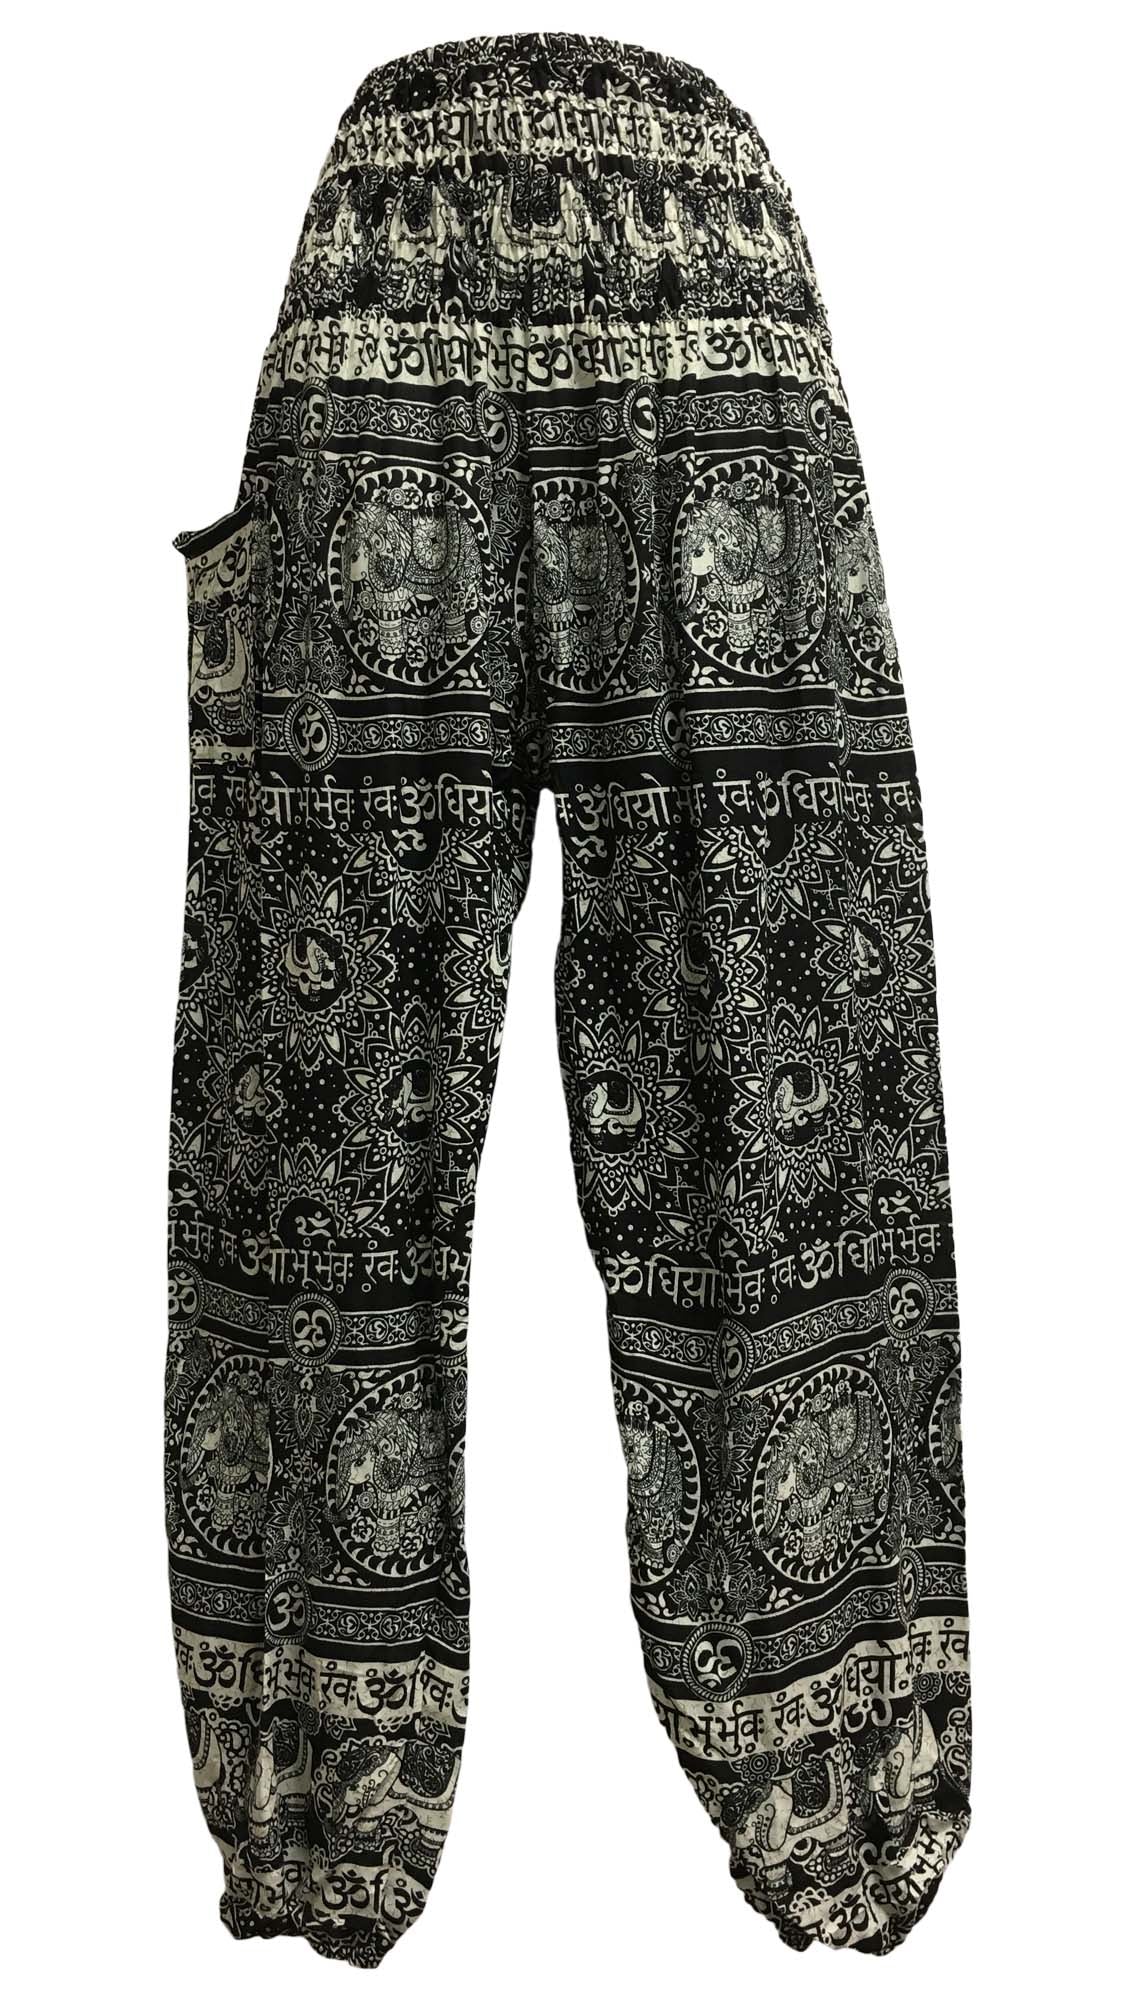 Bohemian Indian Ethnic Print Elephant Om Yoga Unisex Cotton Harem Pants Trousers